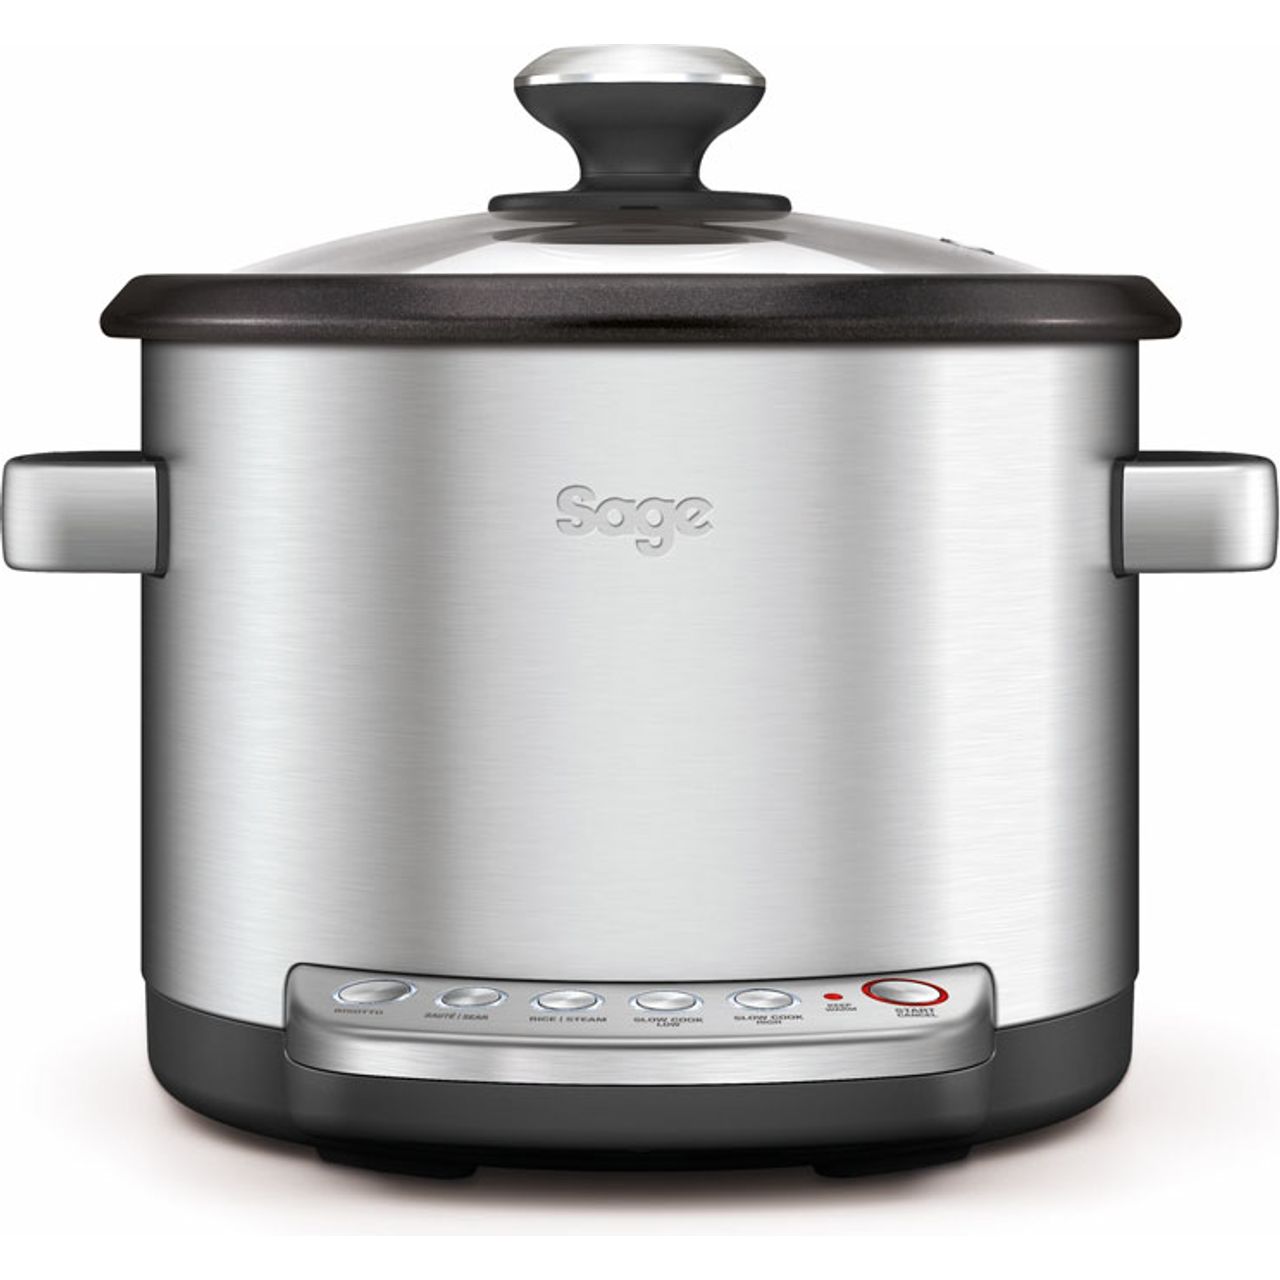 Sage The Risotto Plus BRC600UK 3.7 Litre Multi Cooker Review